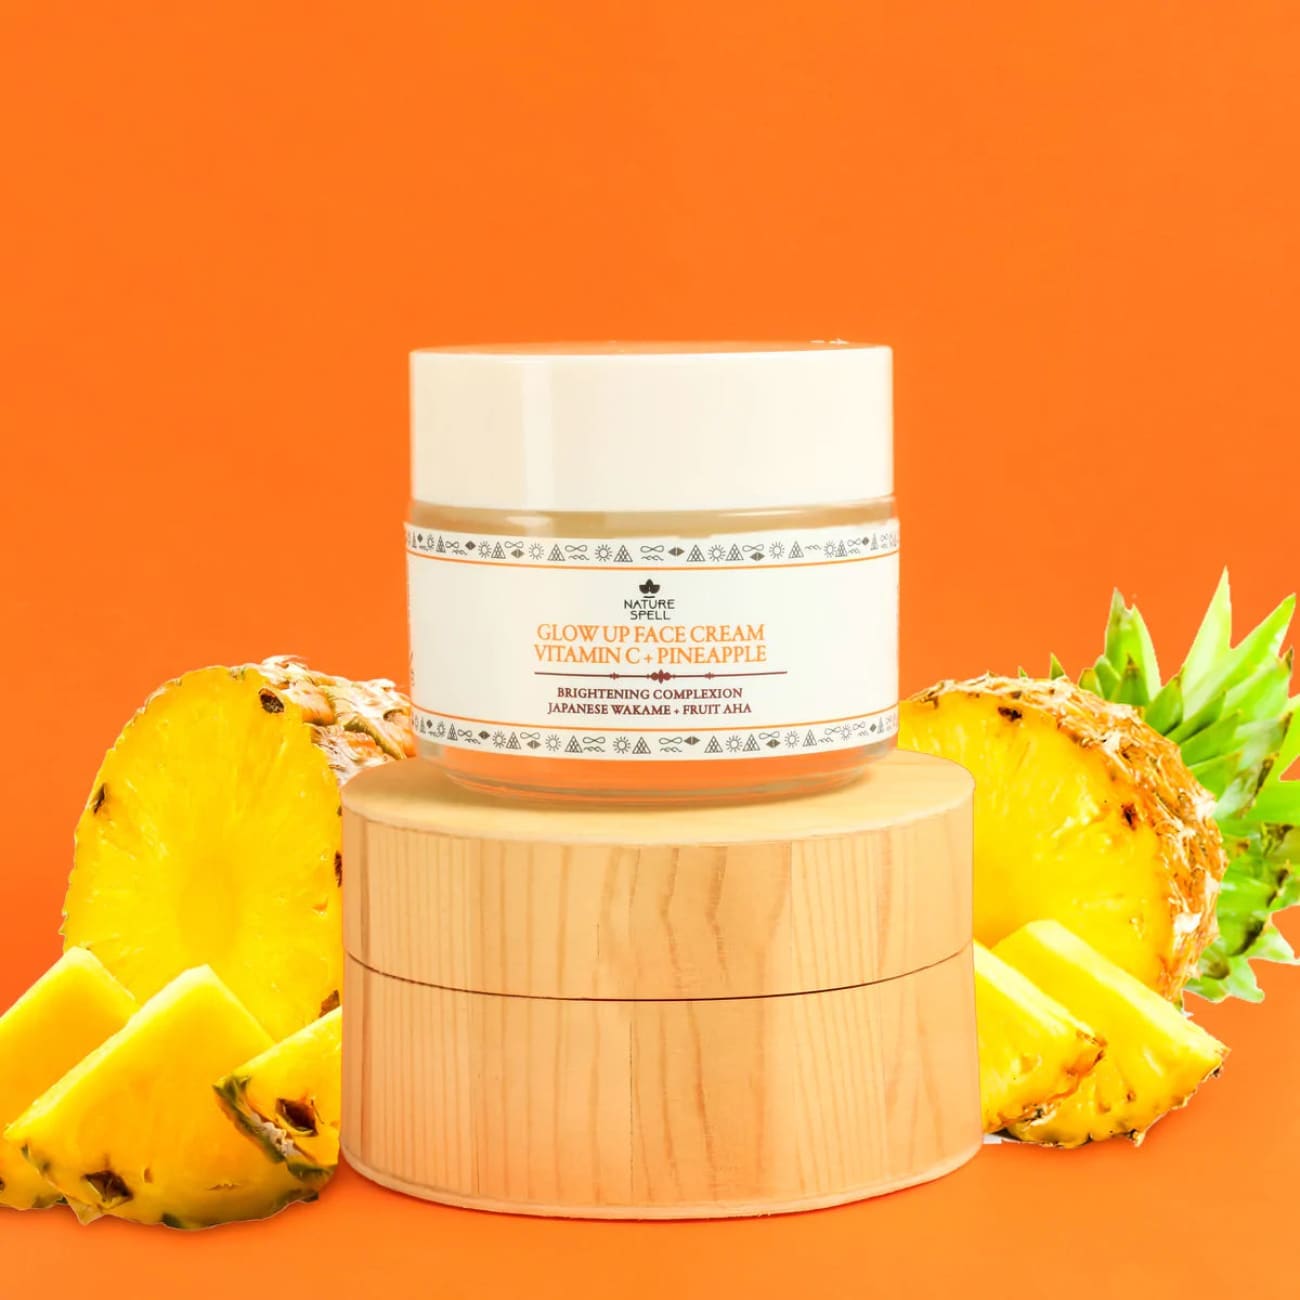 Vitamin C & Pineapple Glow Up Face Cream Rock Chocs 